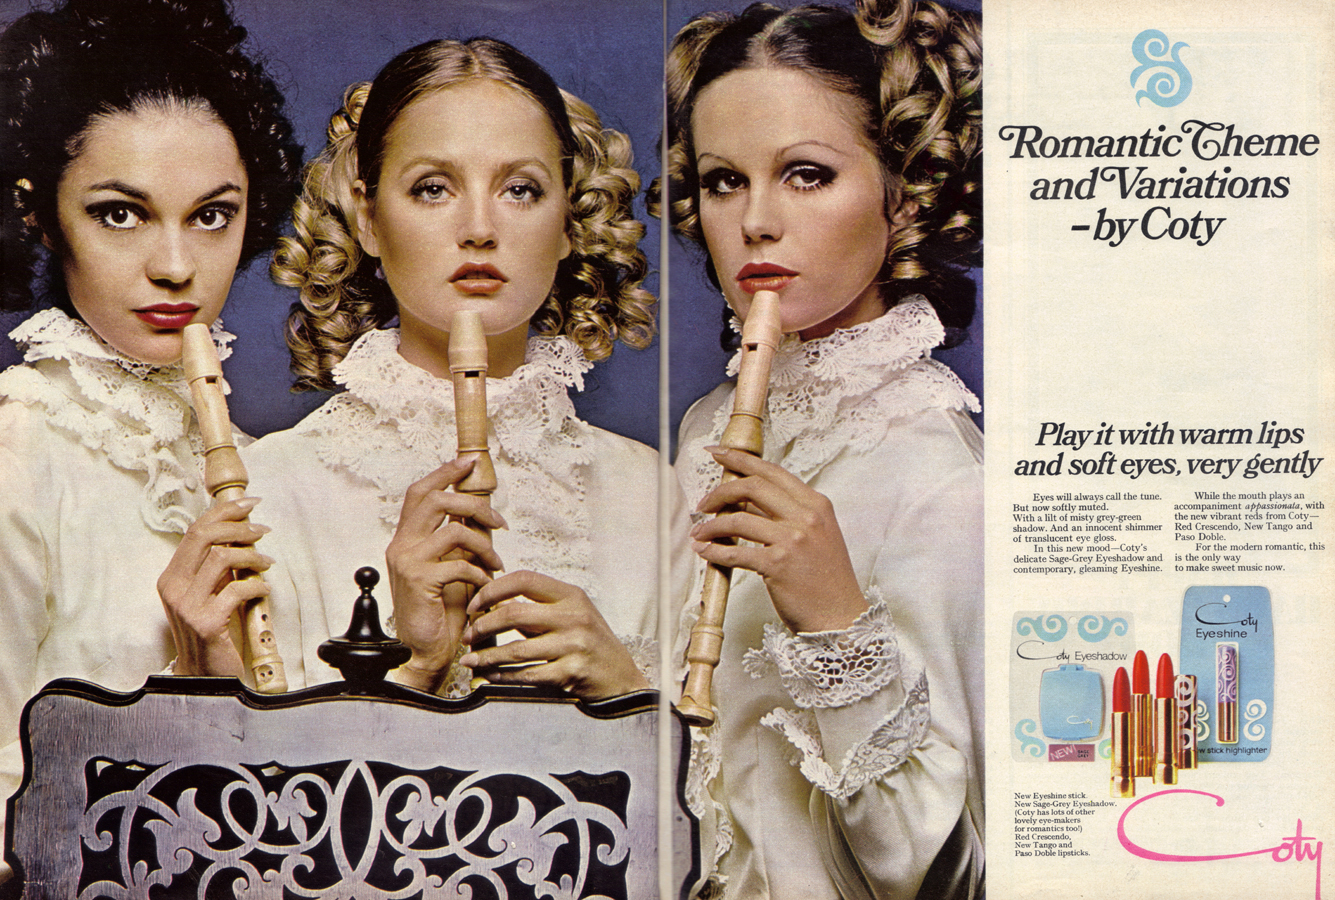 Coty Vanity Fair ad, 1968